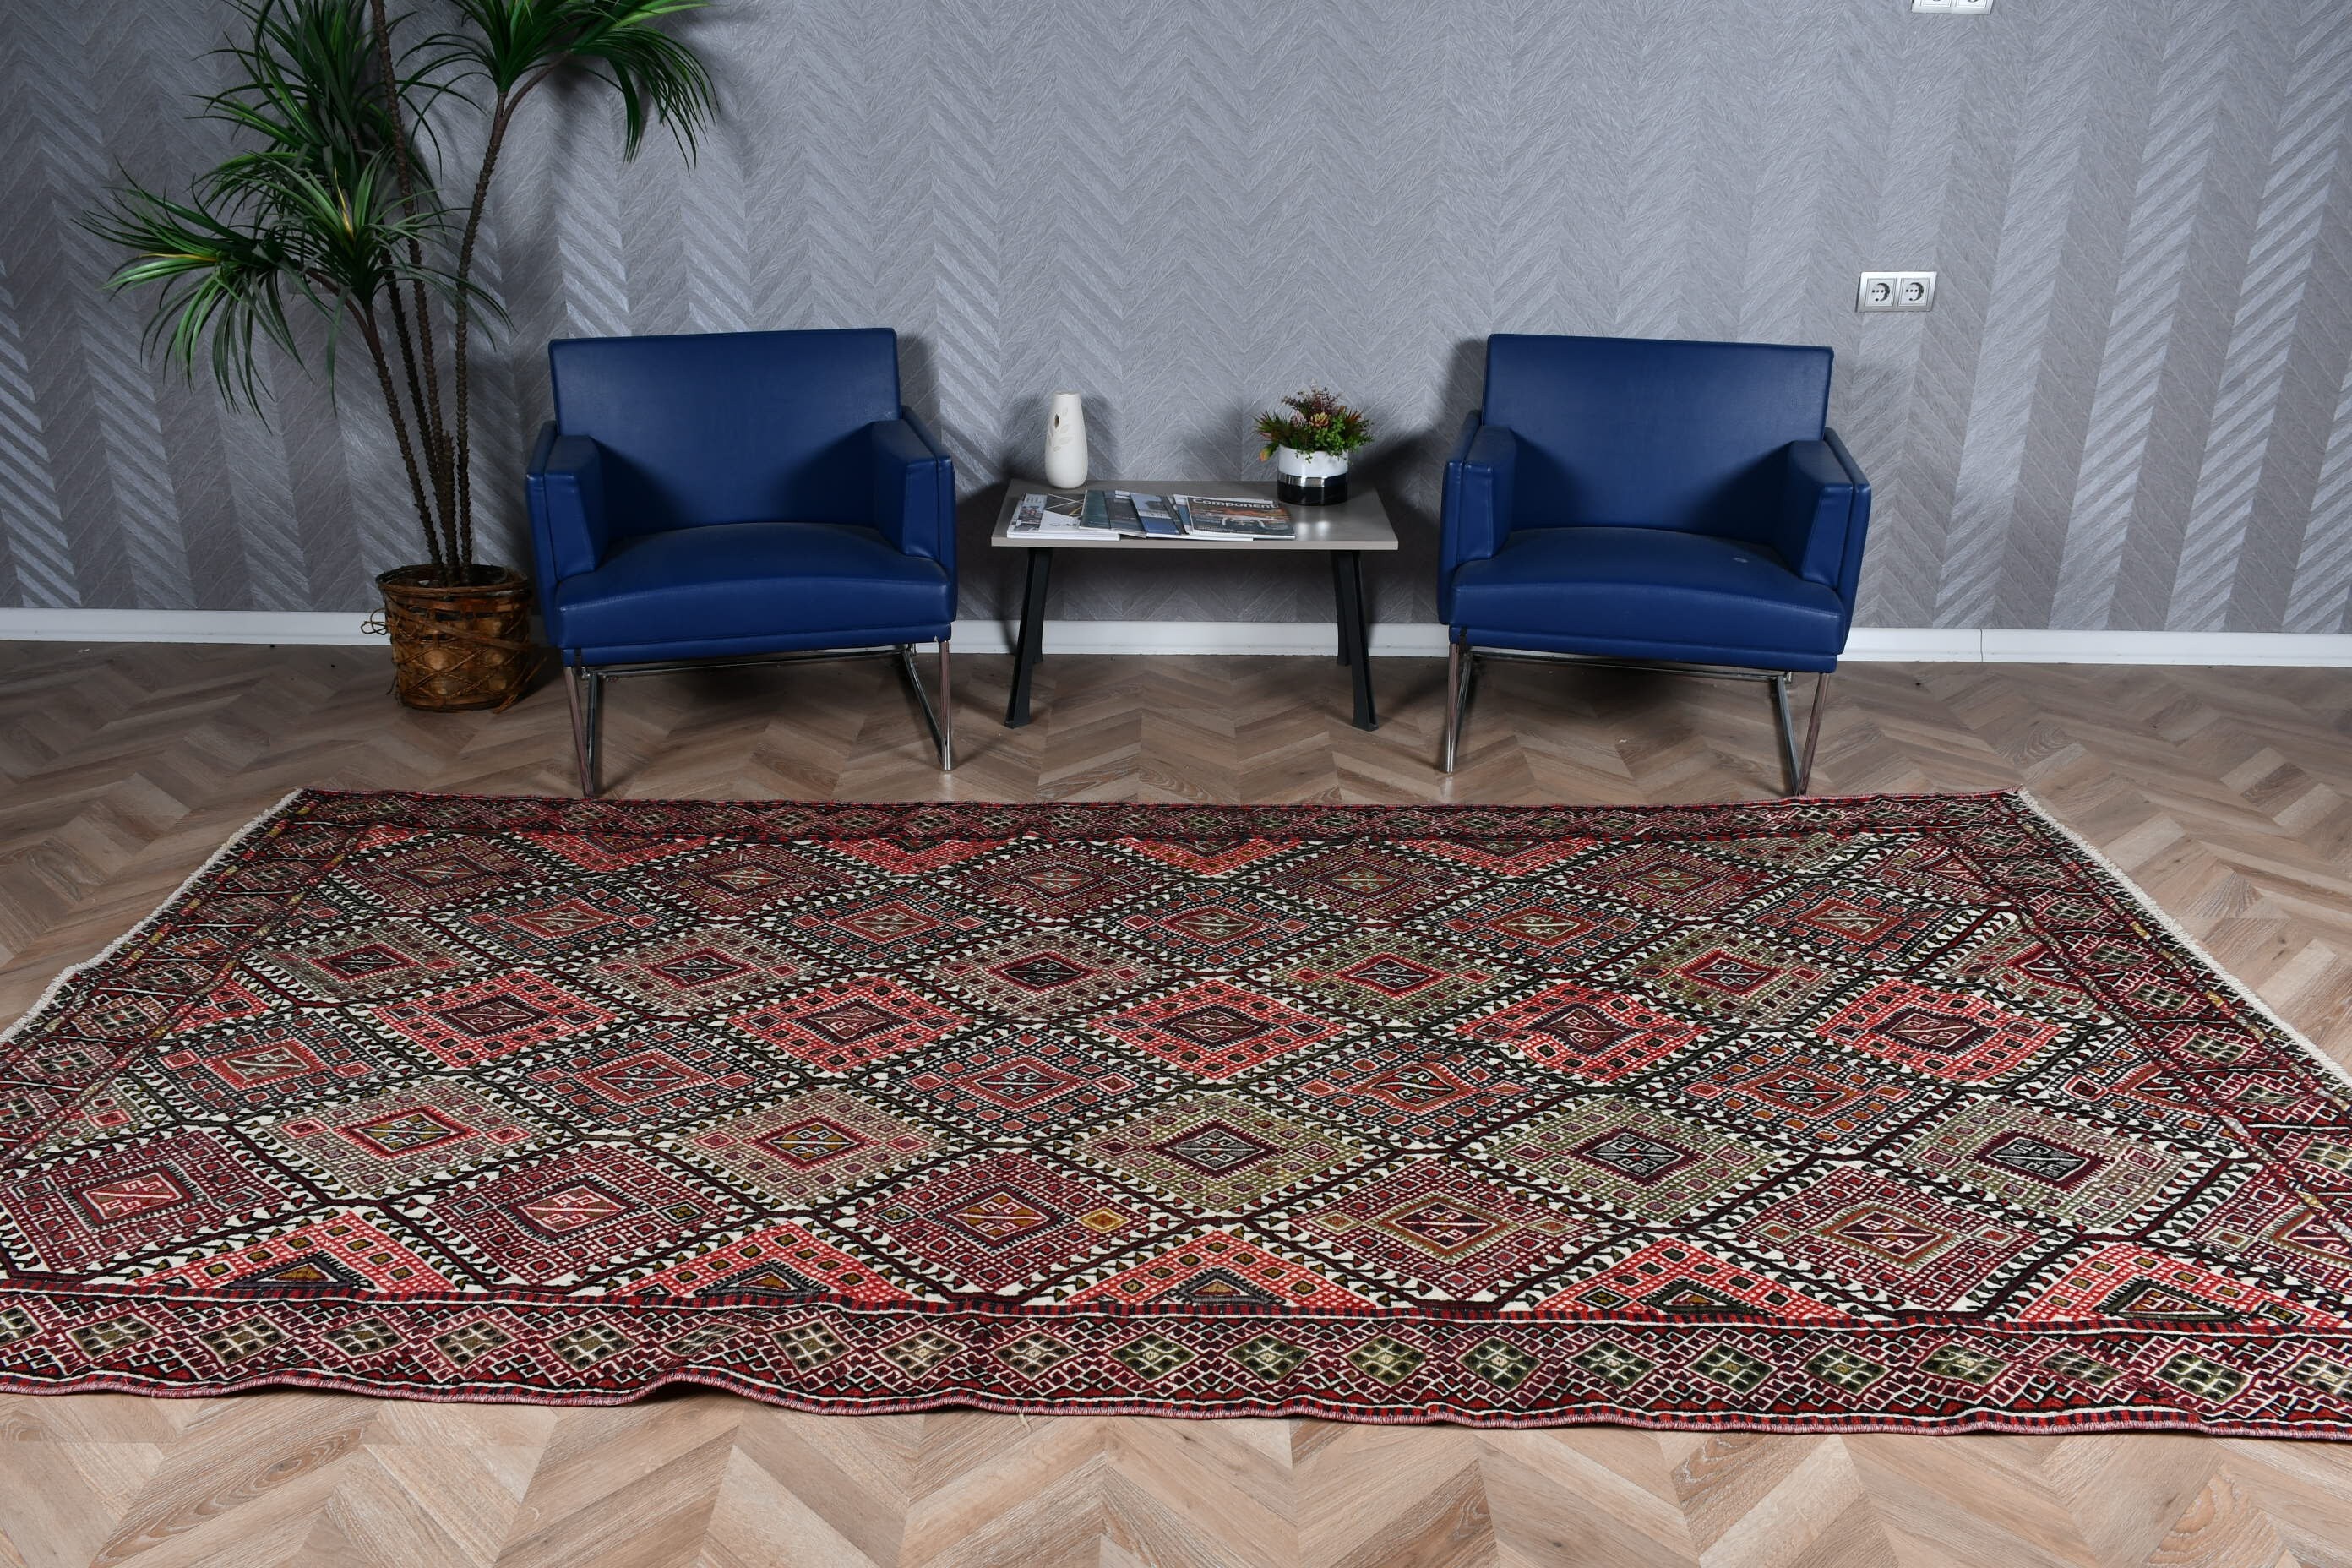 Living Room Rug, Vintage Rug, Turkish Rug, Salon Rug, Moroccan Rug, Beige Bedroom Rug, Kilim, 5.2x10.7 ft Large Rugs